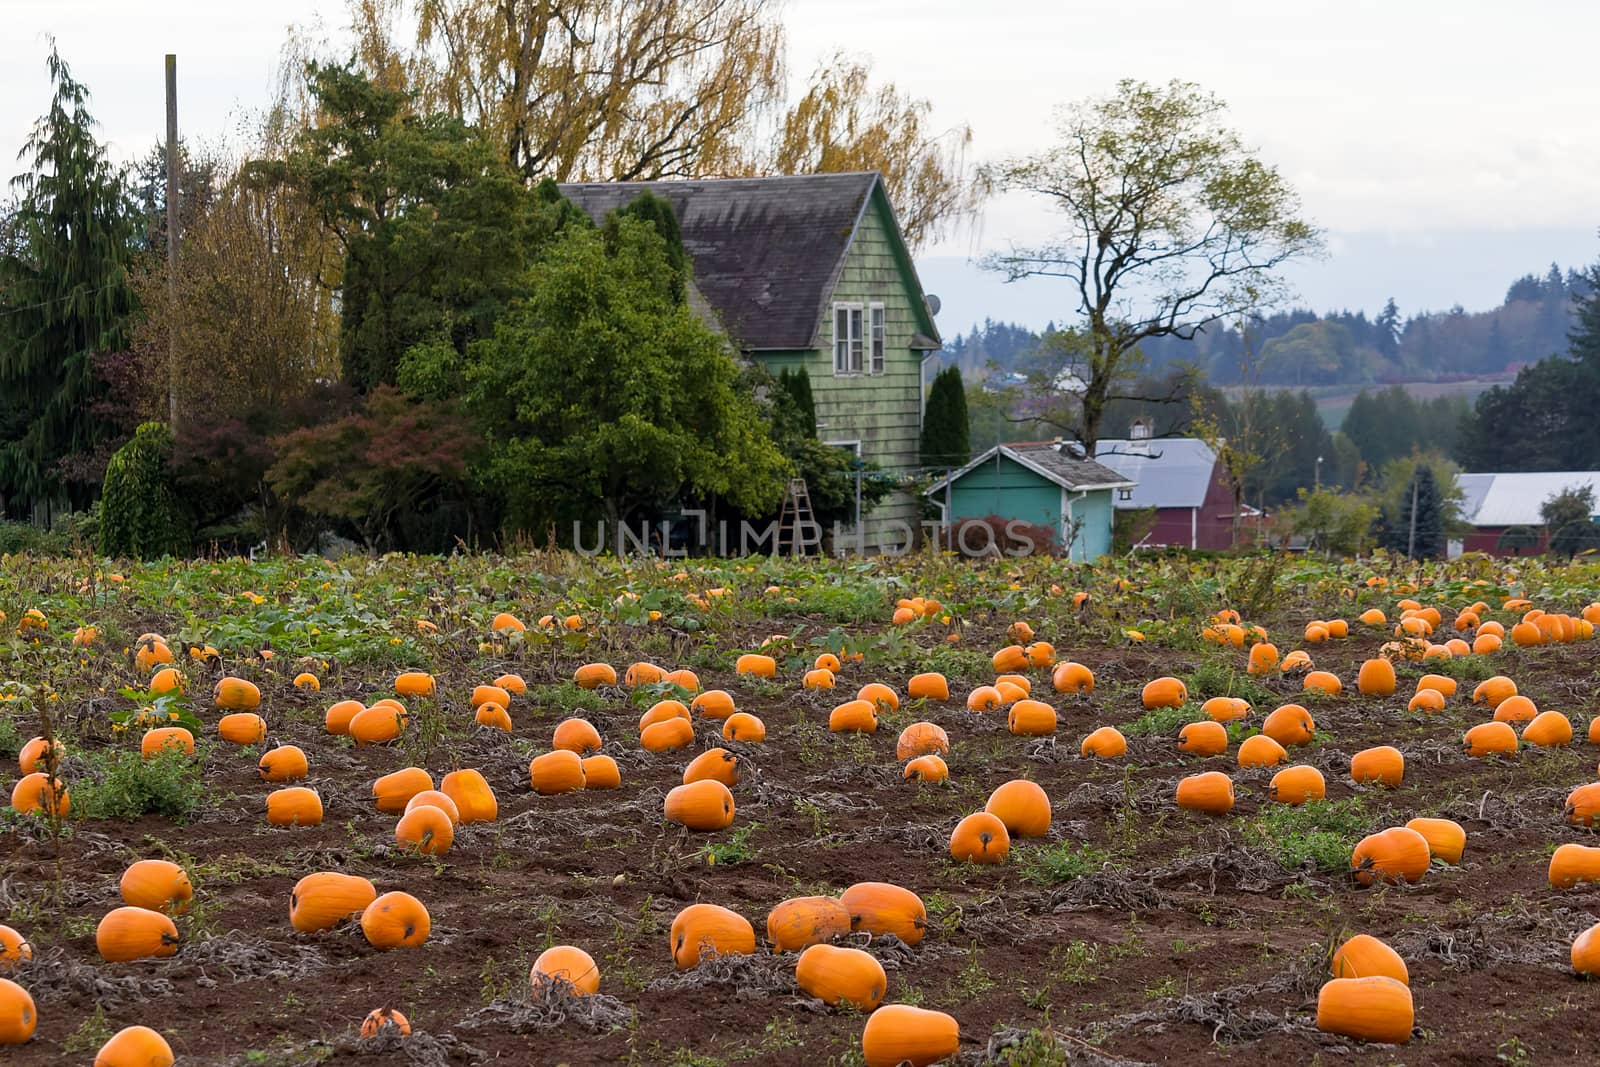 Pumpkin Patch by Farm house in Rural Farmland Oregon during Fall Season